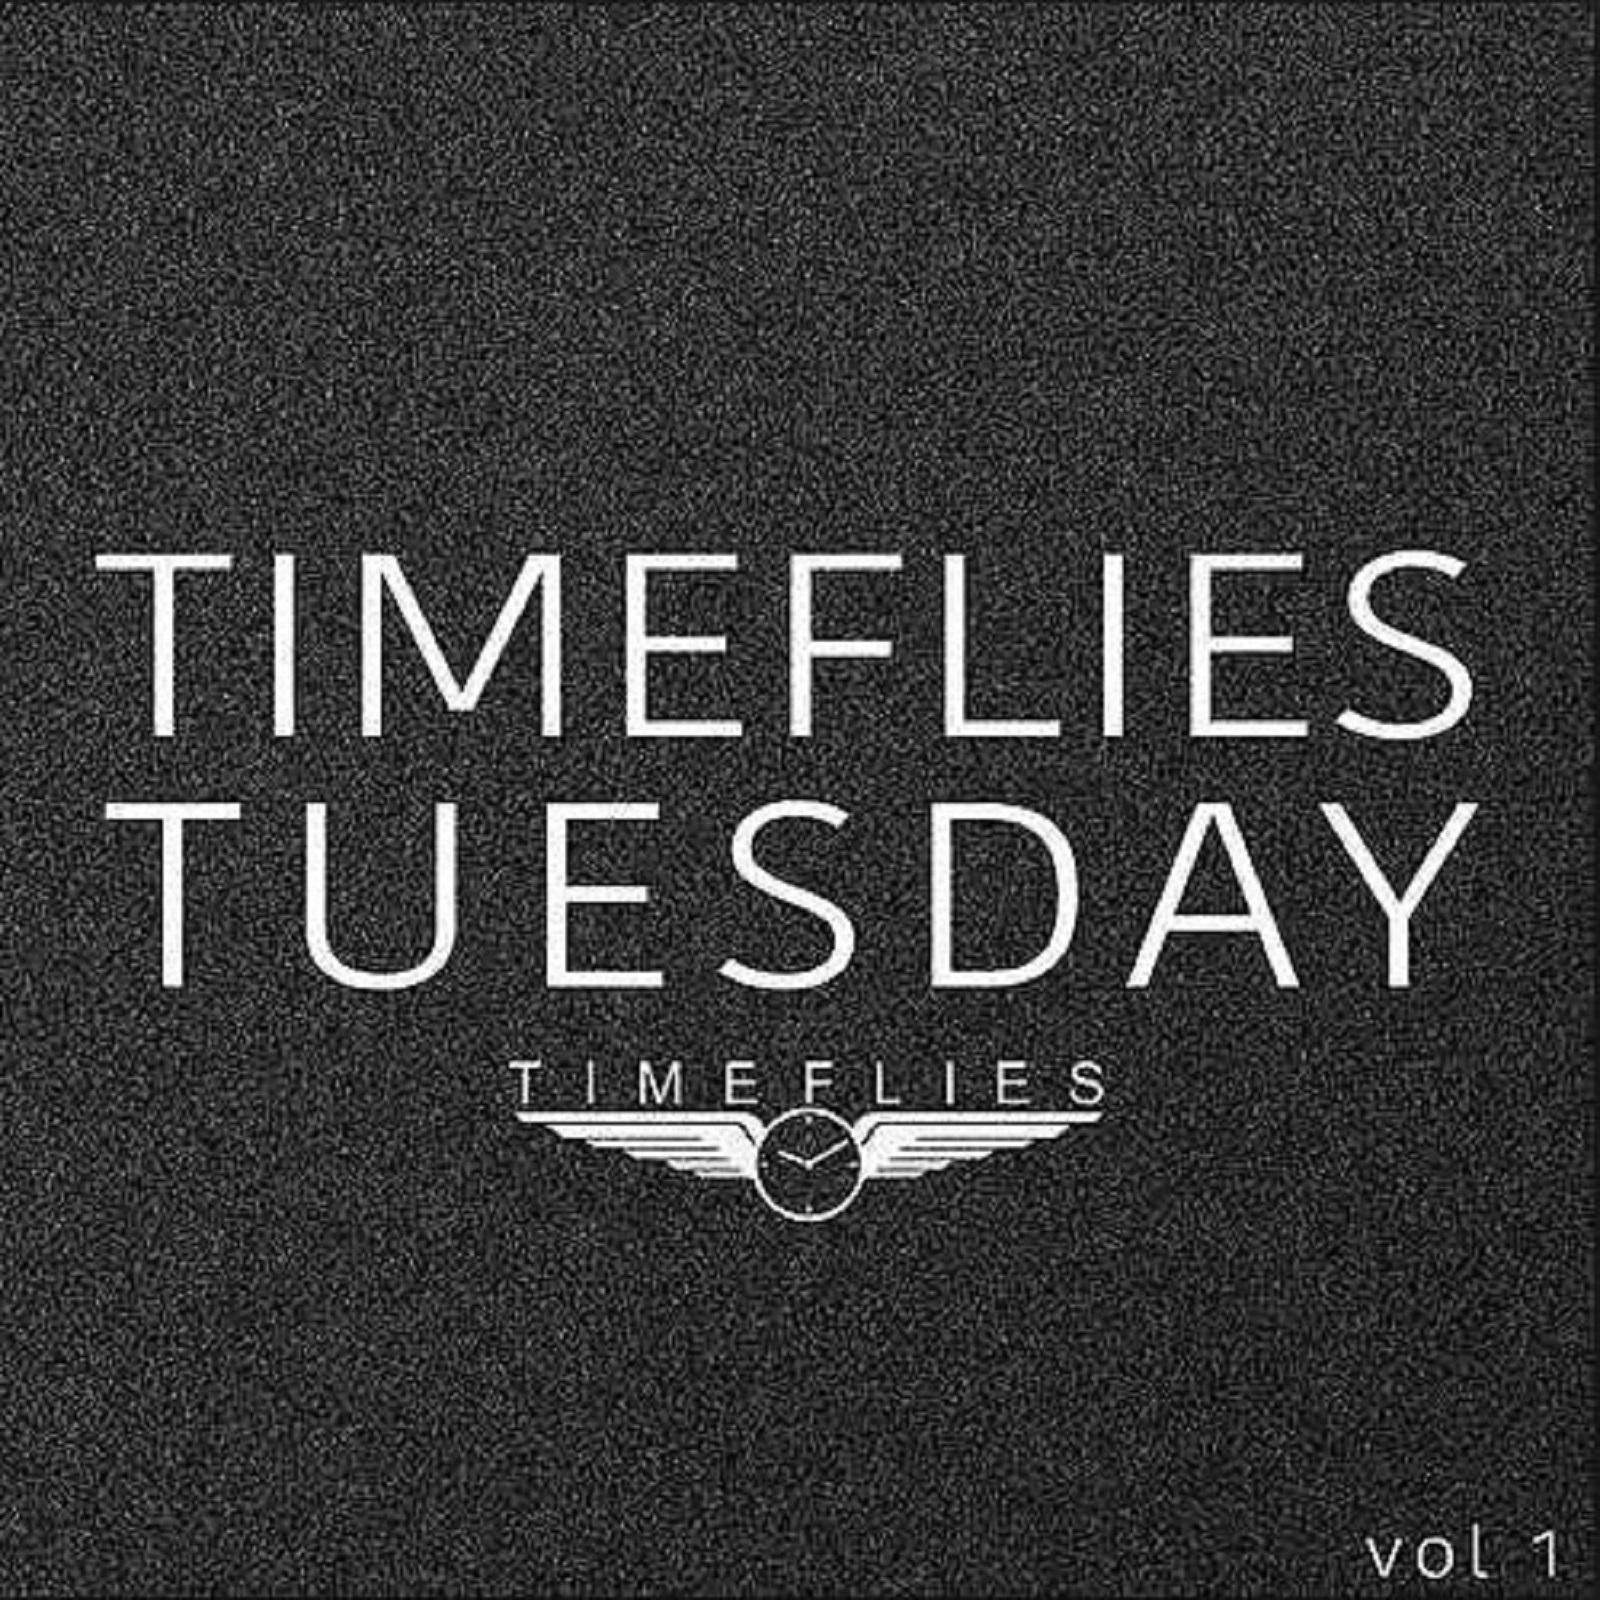 Timeflies Tuesday, Vol. 1